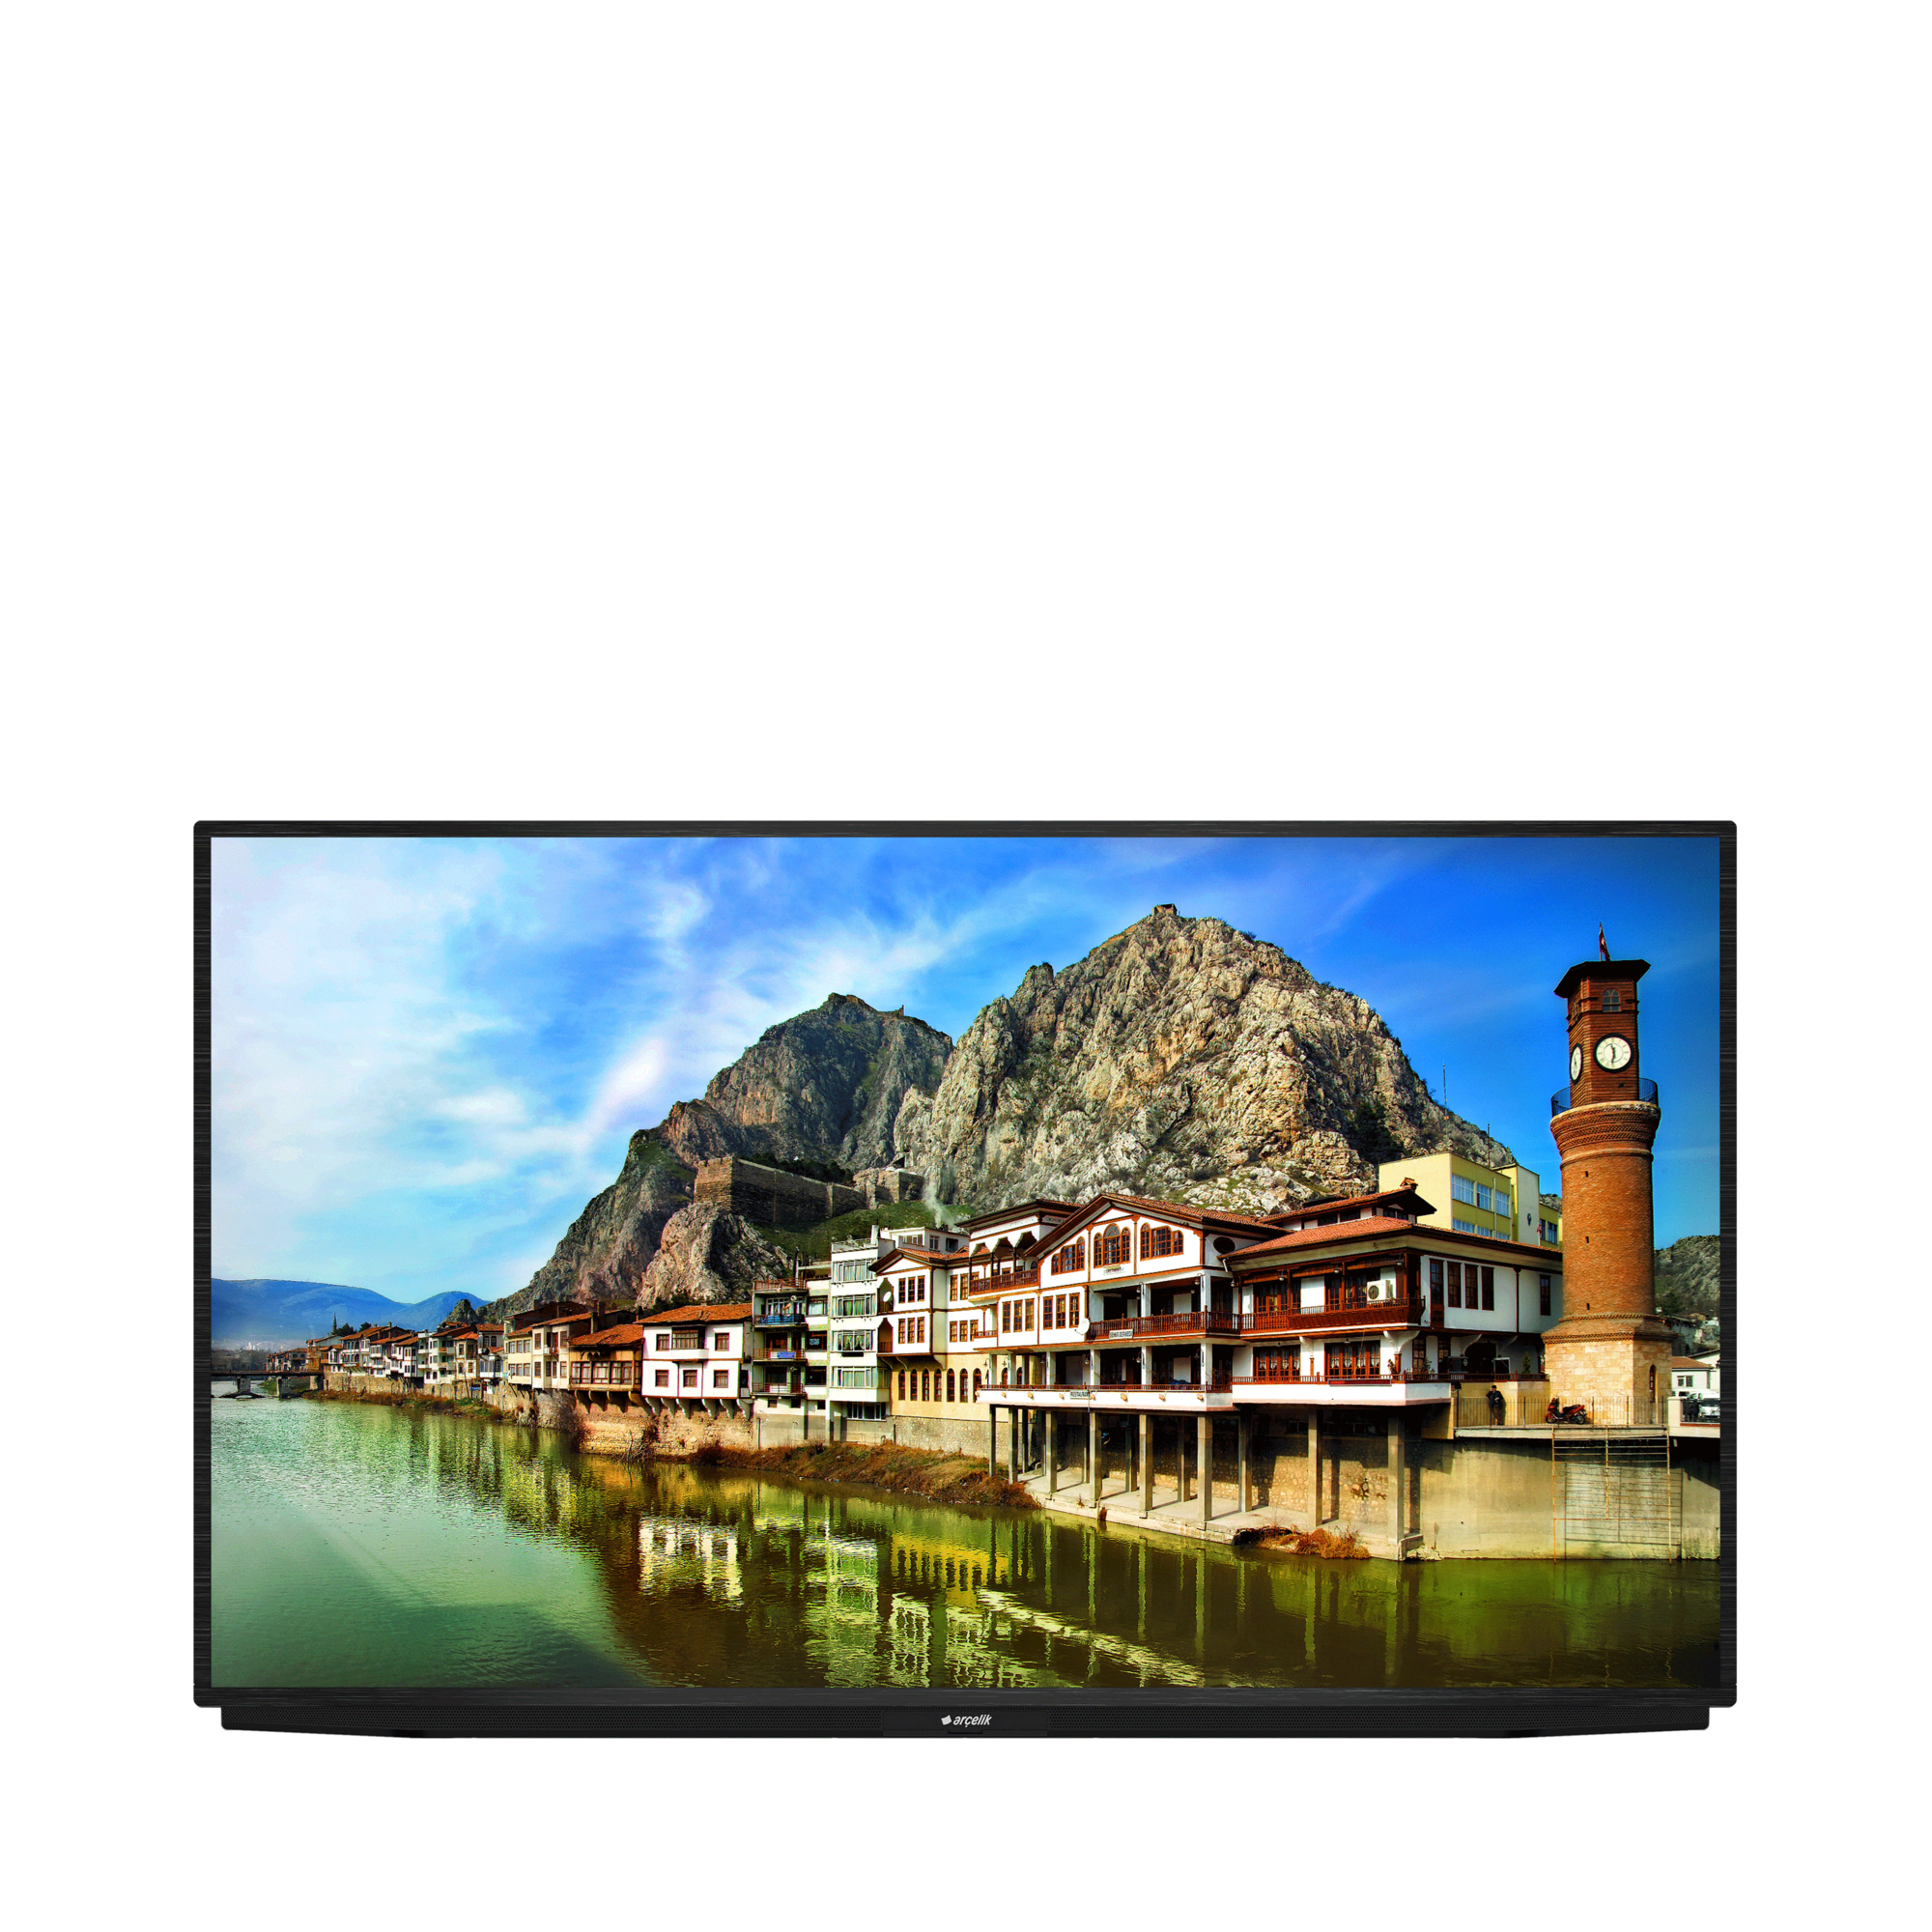 A43K 790G HOTEL TV LED & LCD TV